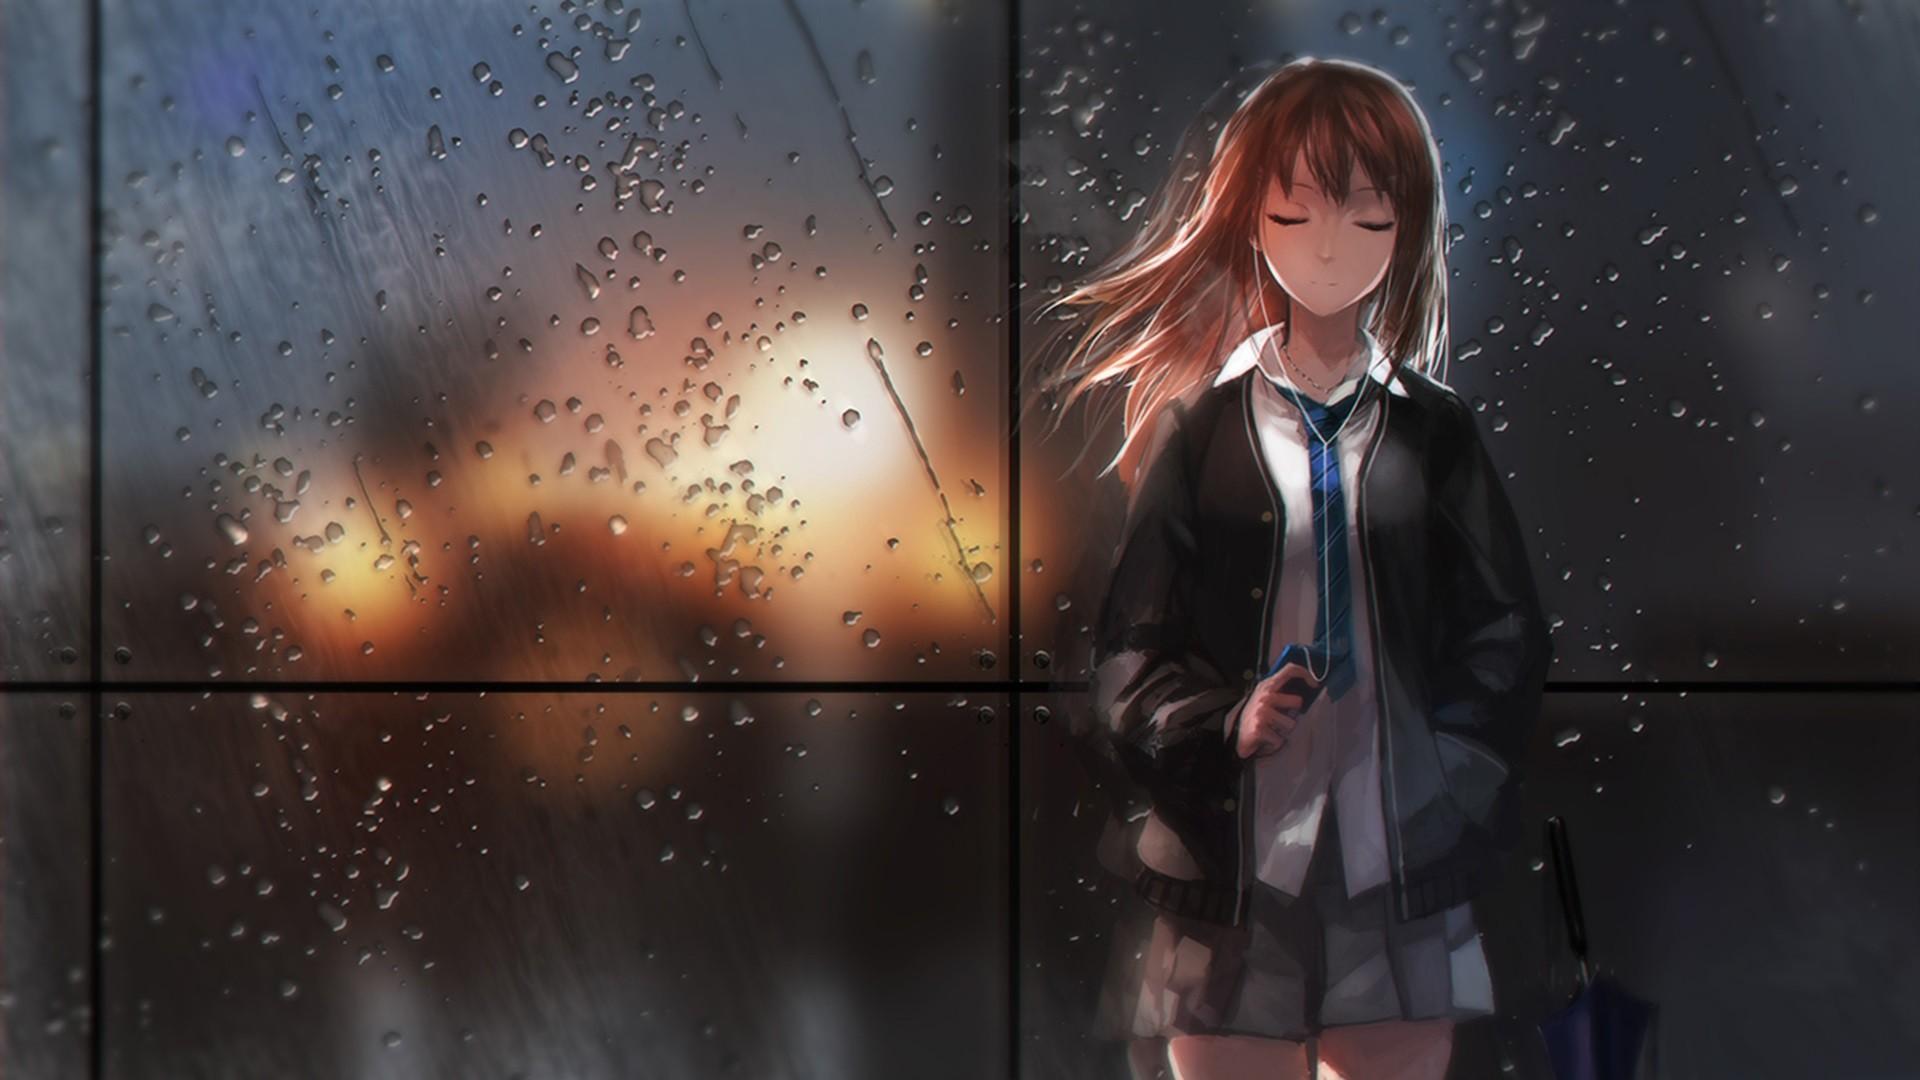 Hd Girl, Anime, Rain, Glass, Light, Schoolgirl Wallpaper - 1080p Anime Wallpaper Hd - HD Wallpaper 